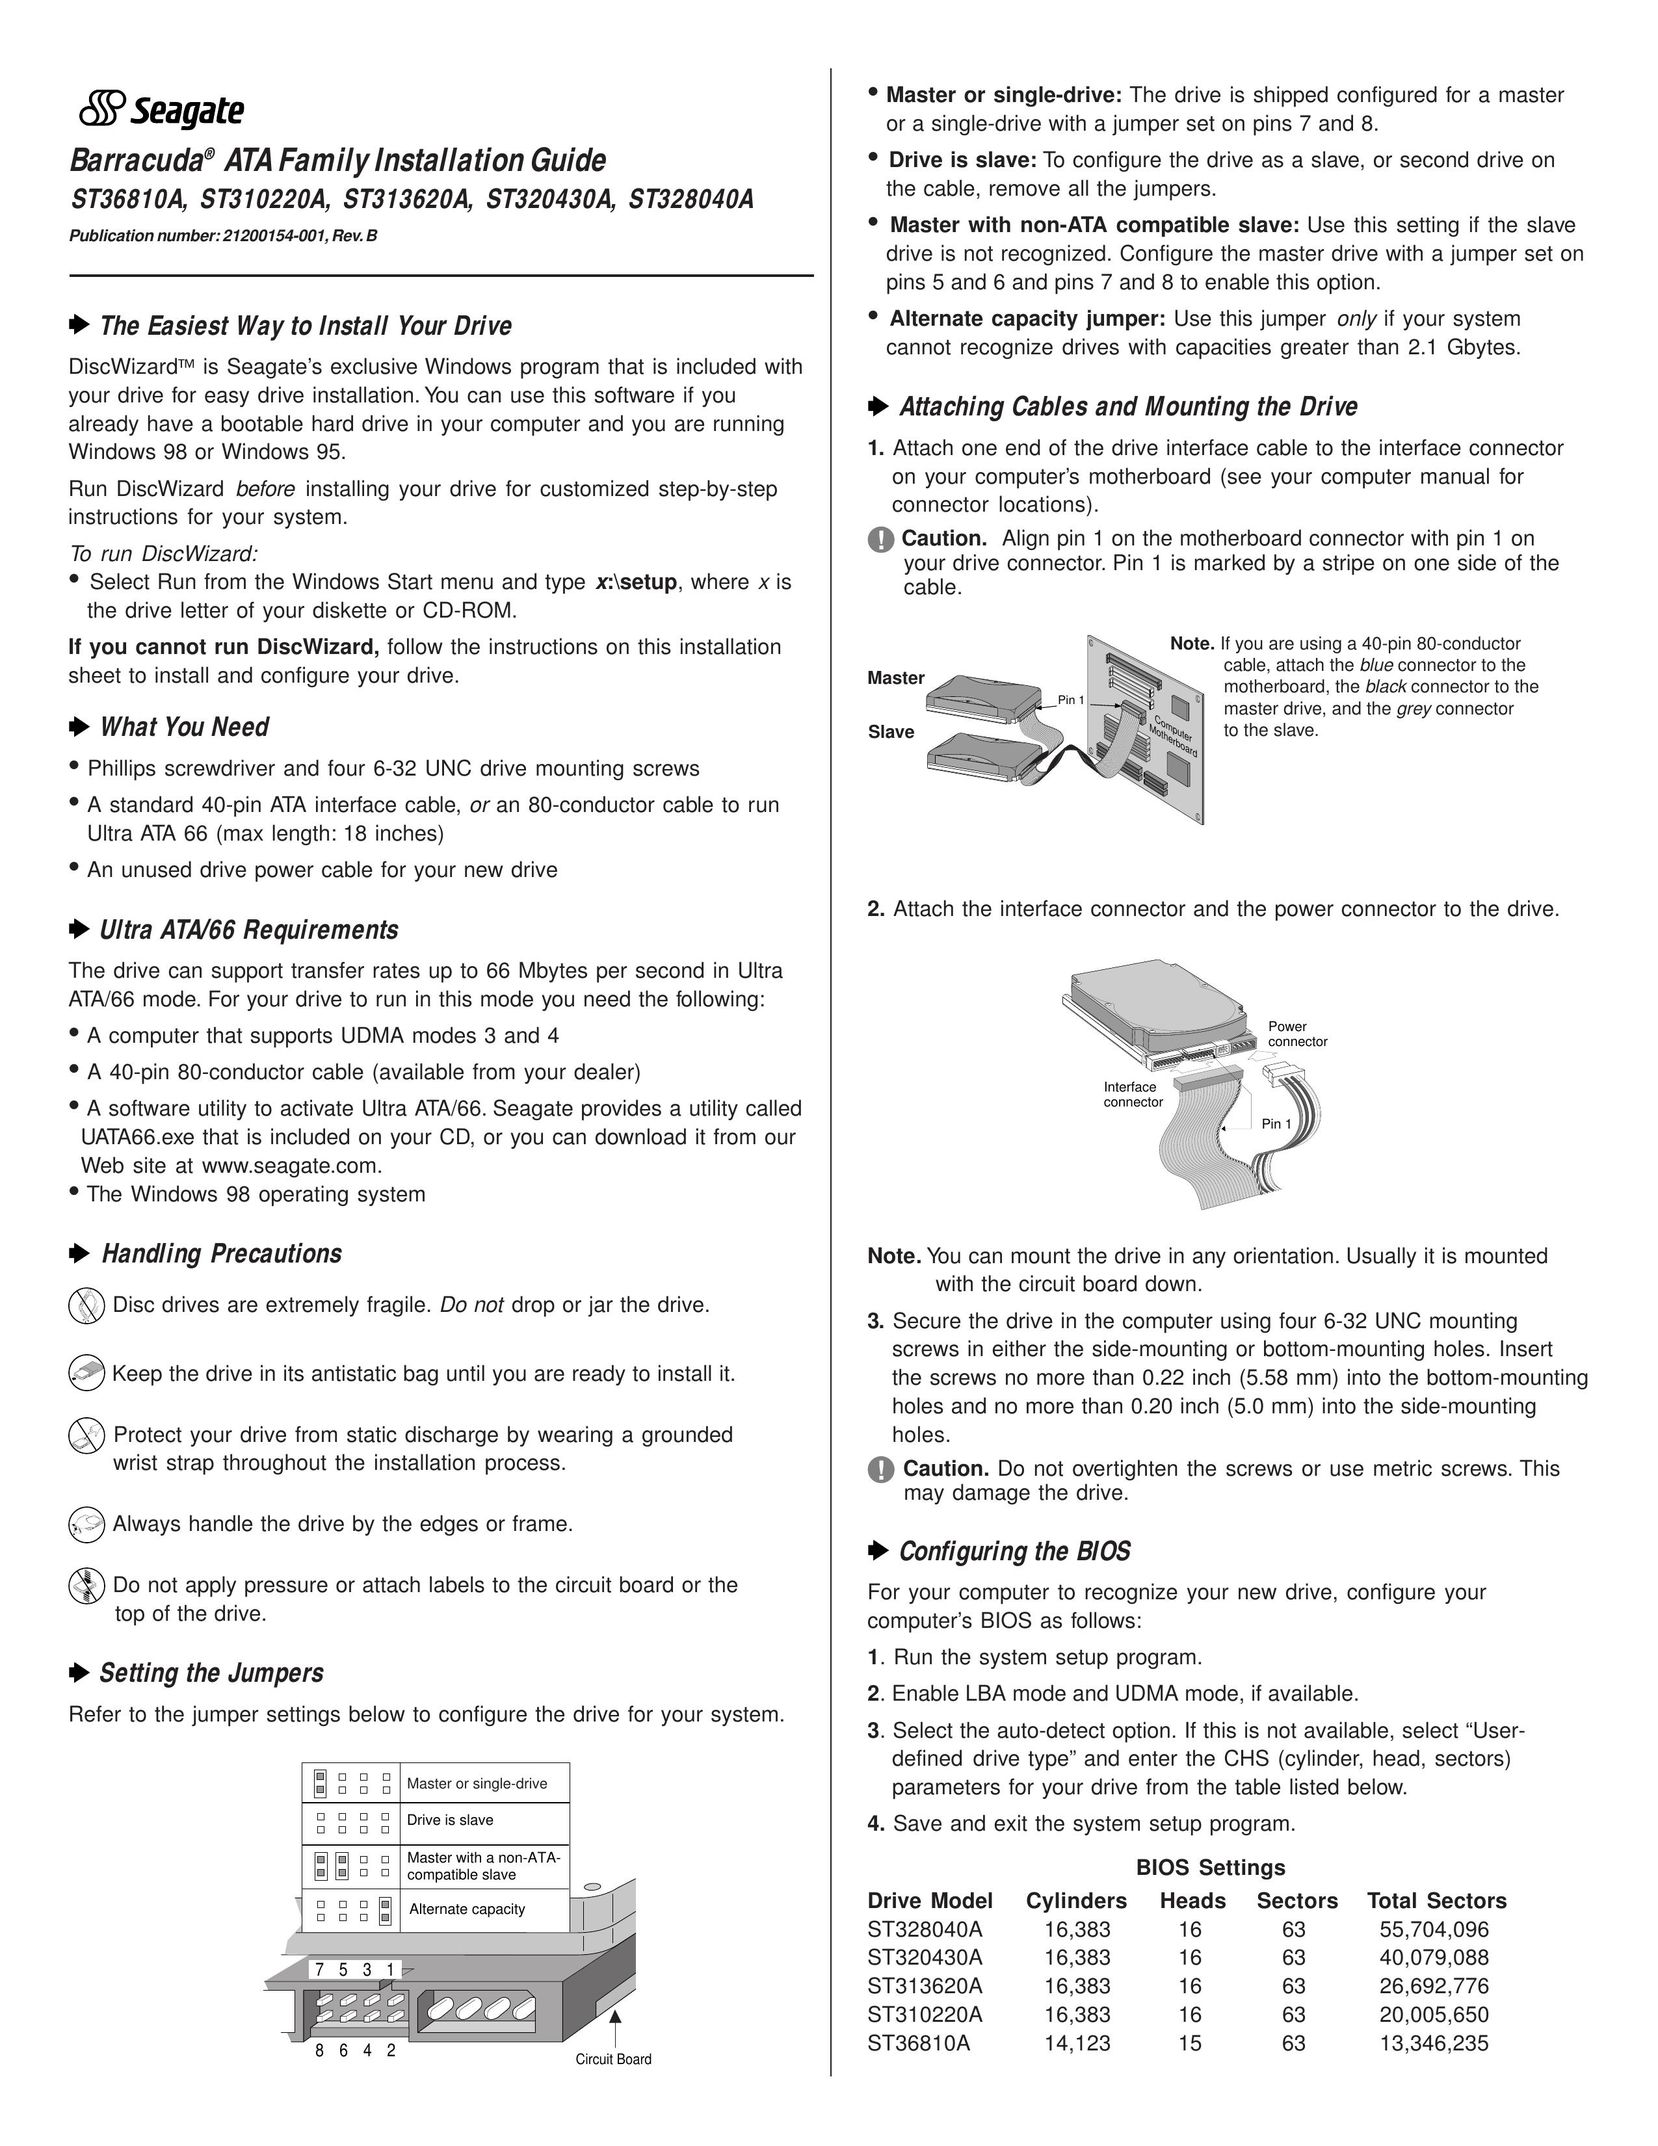 Barracuda Networks ST320430A Computer Drive User Manual